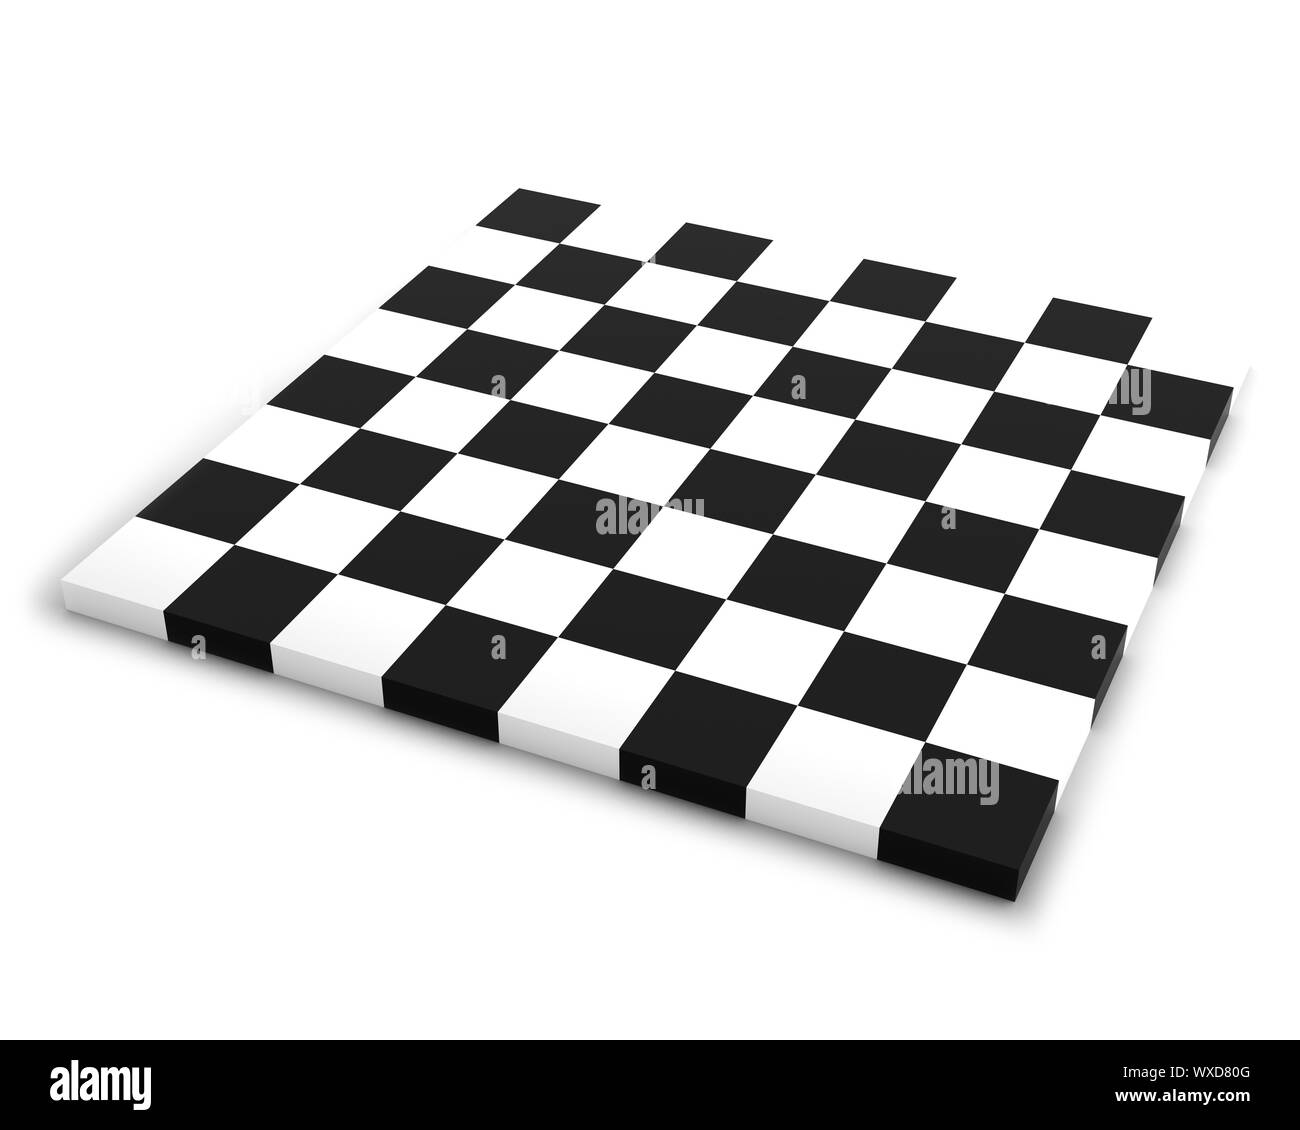 На шахматной доске осталось 5 белых фигур. Шахматное поле. Шахматы пустая доска. Шахматная доска картинка фон. Шахматное поле доска половинка.